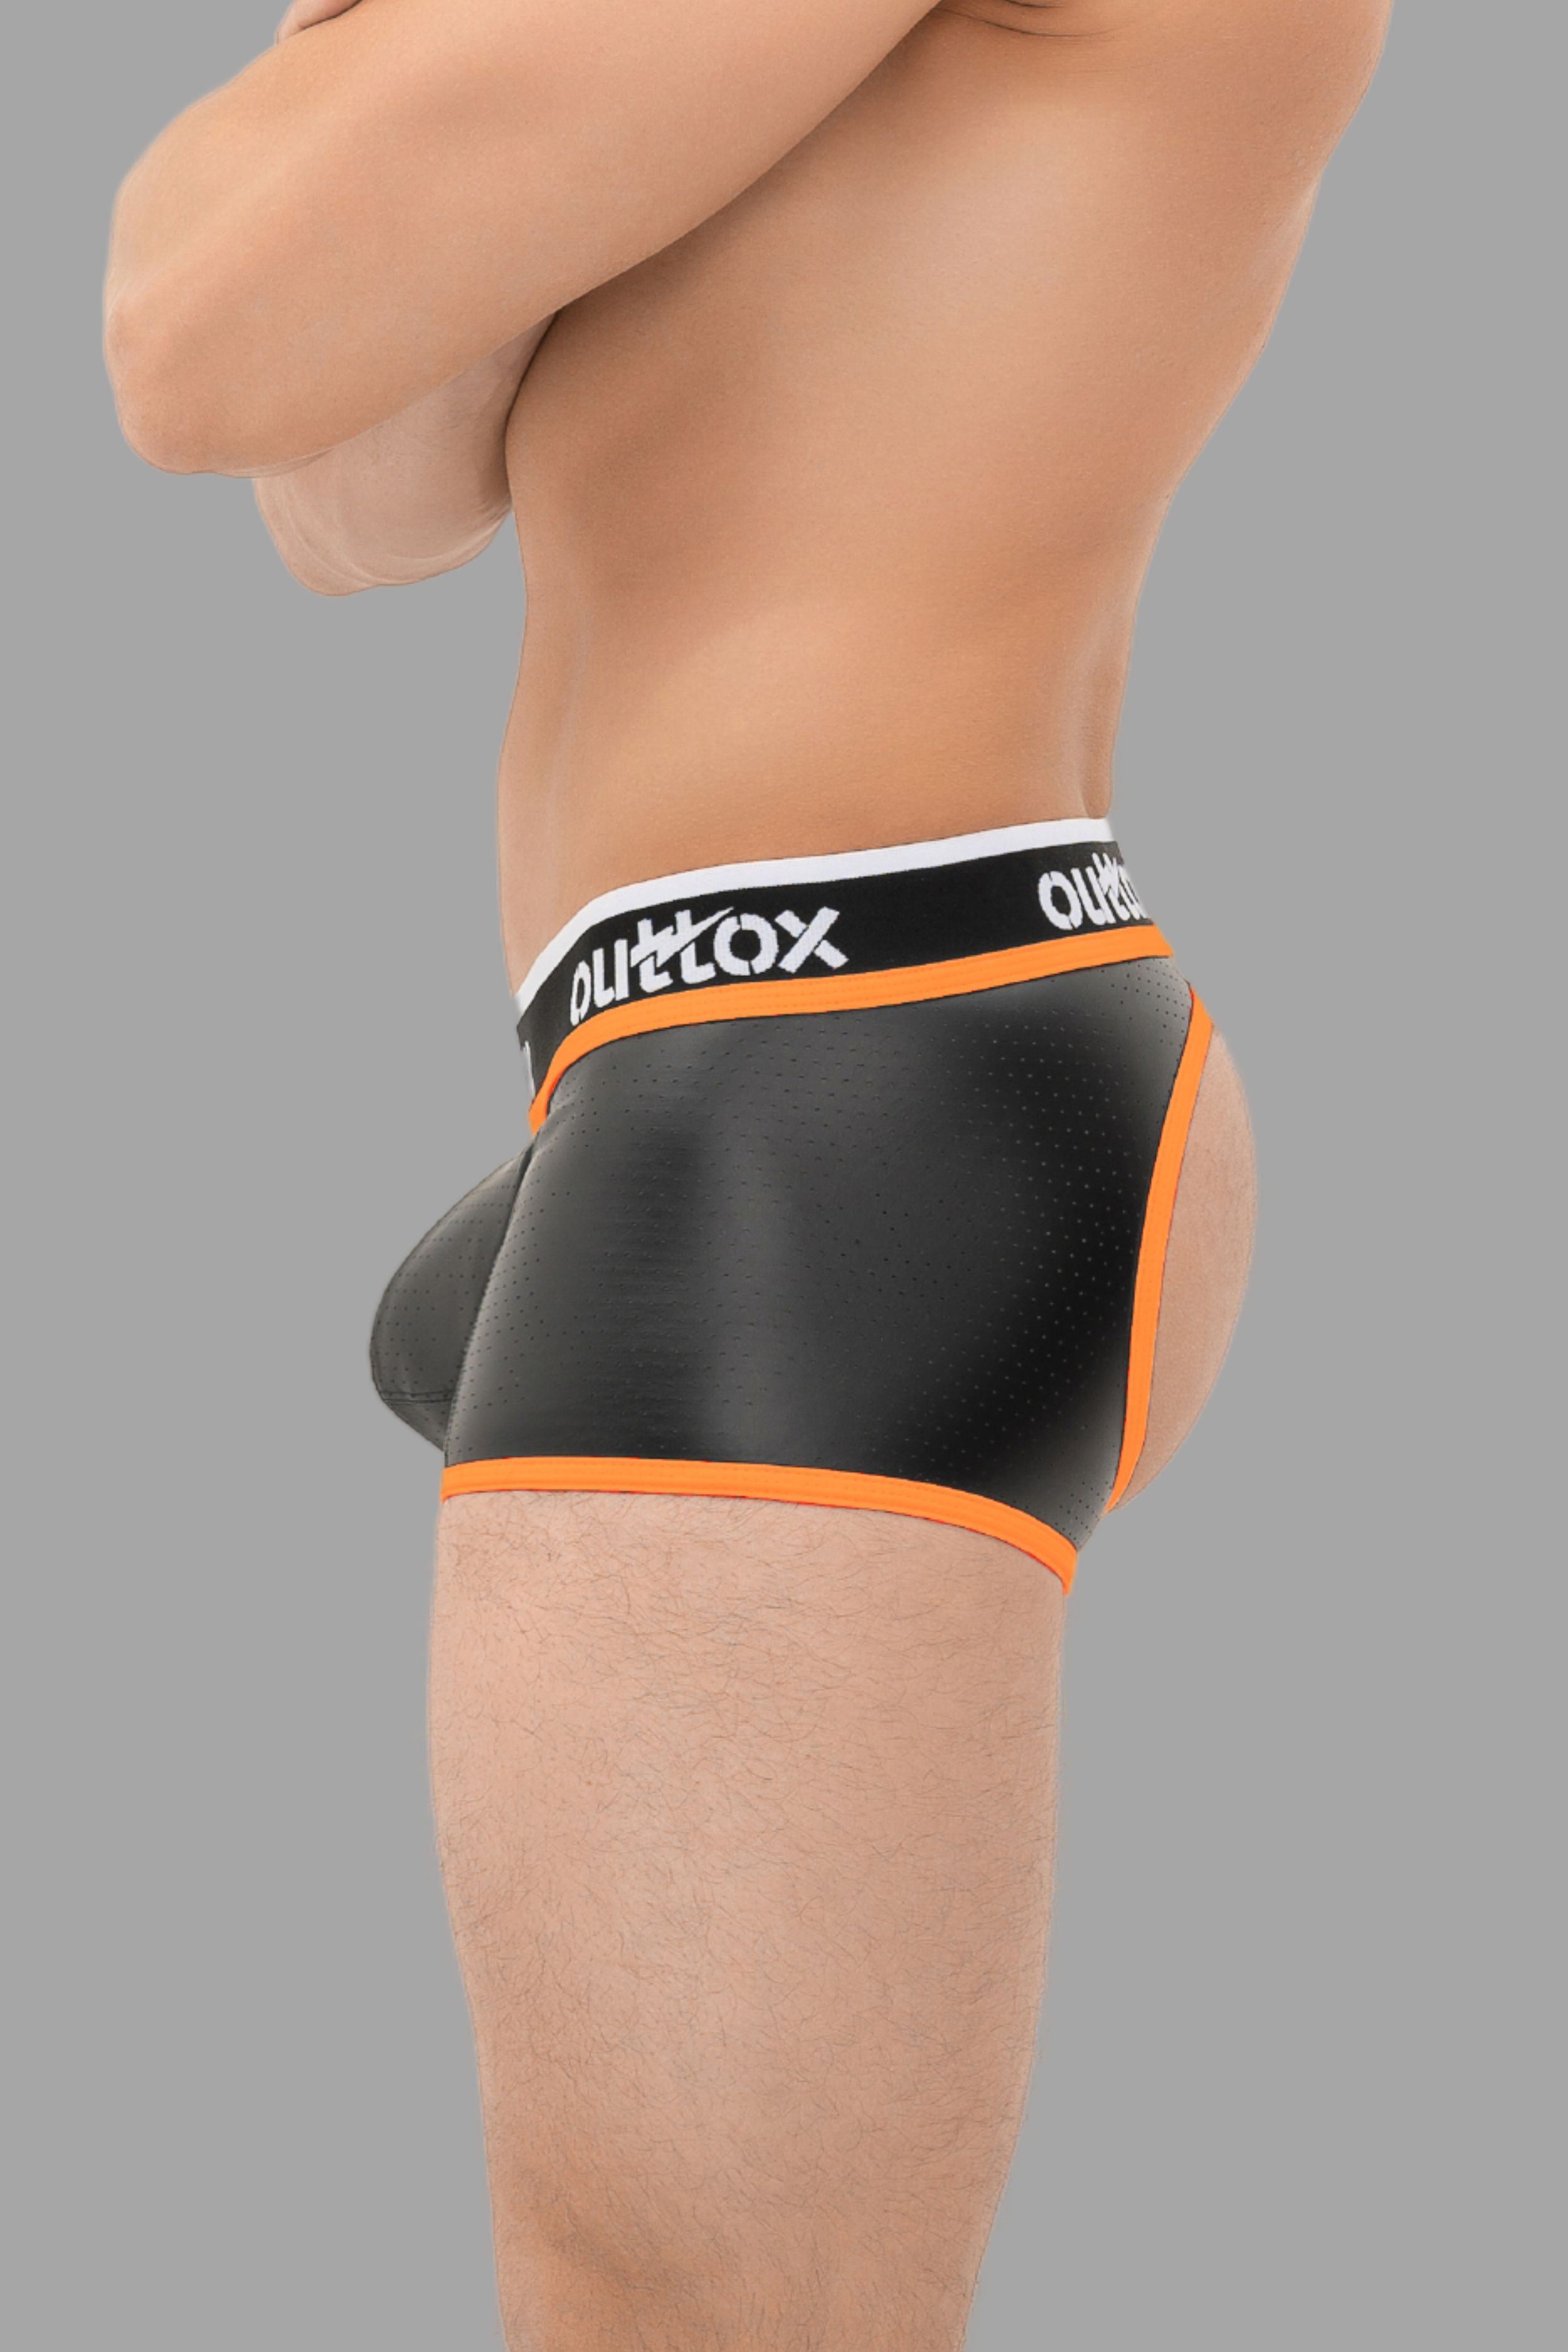 Outtox. Pantalones cortos con parte trasera abierta y bragueta a presión. Negro+Naranja